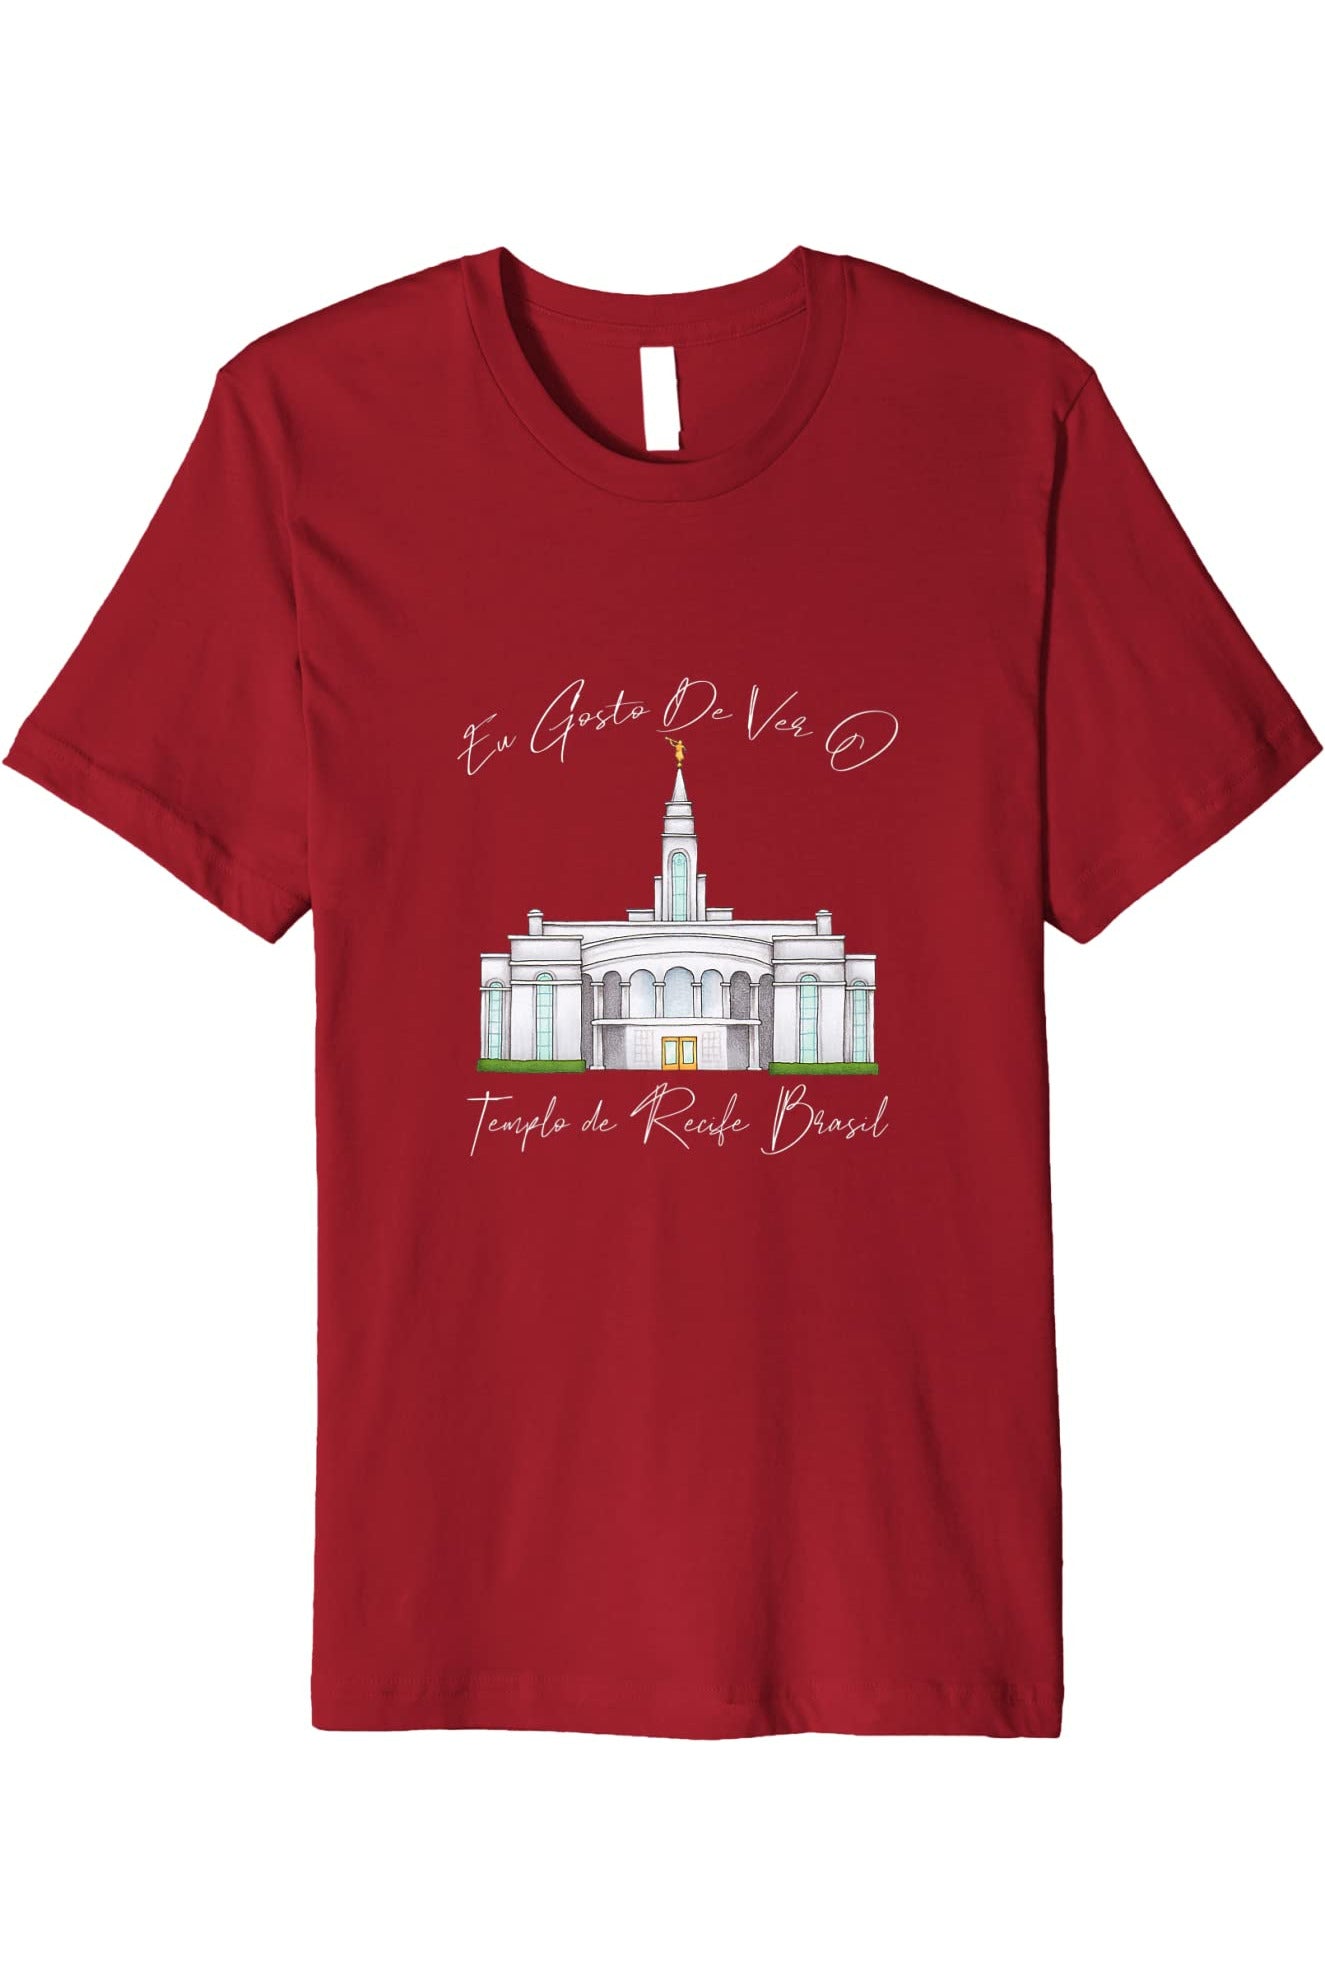 Templo de Manaus Brasil T-Shirt - Premium - Calligraphy Style (Portuguese) US